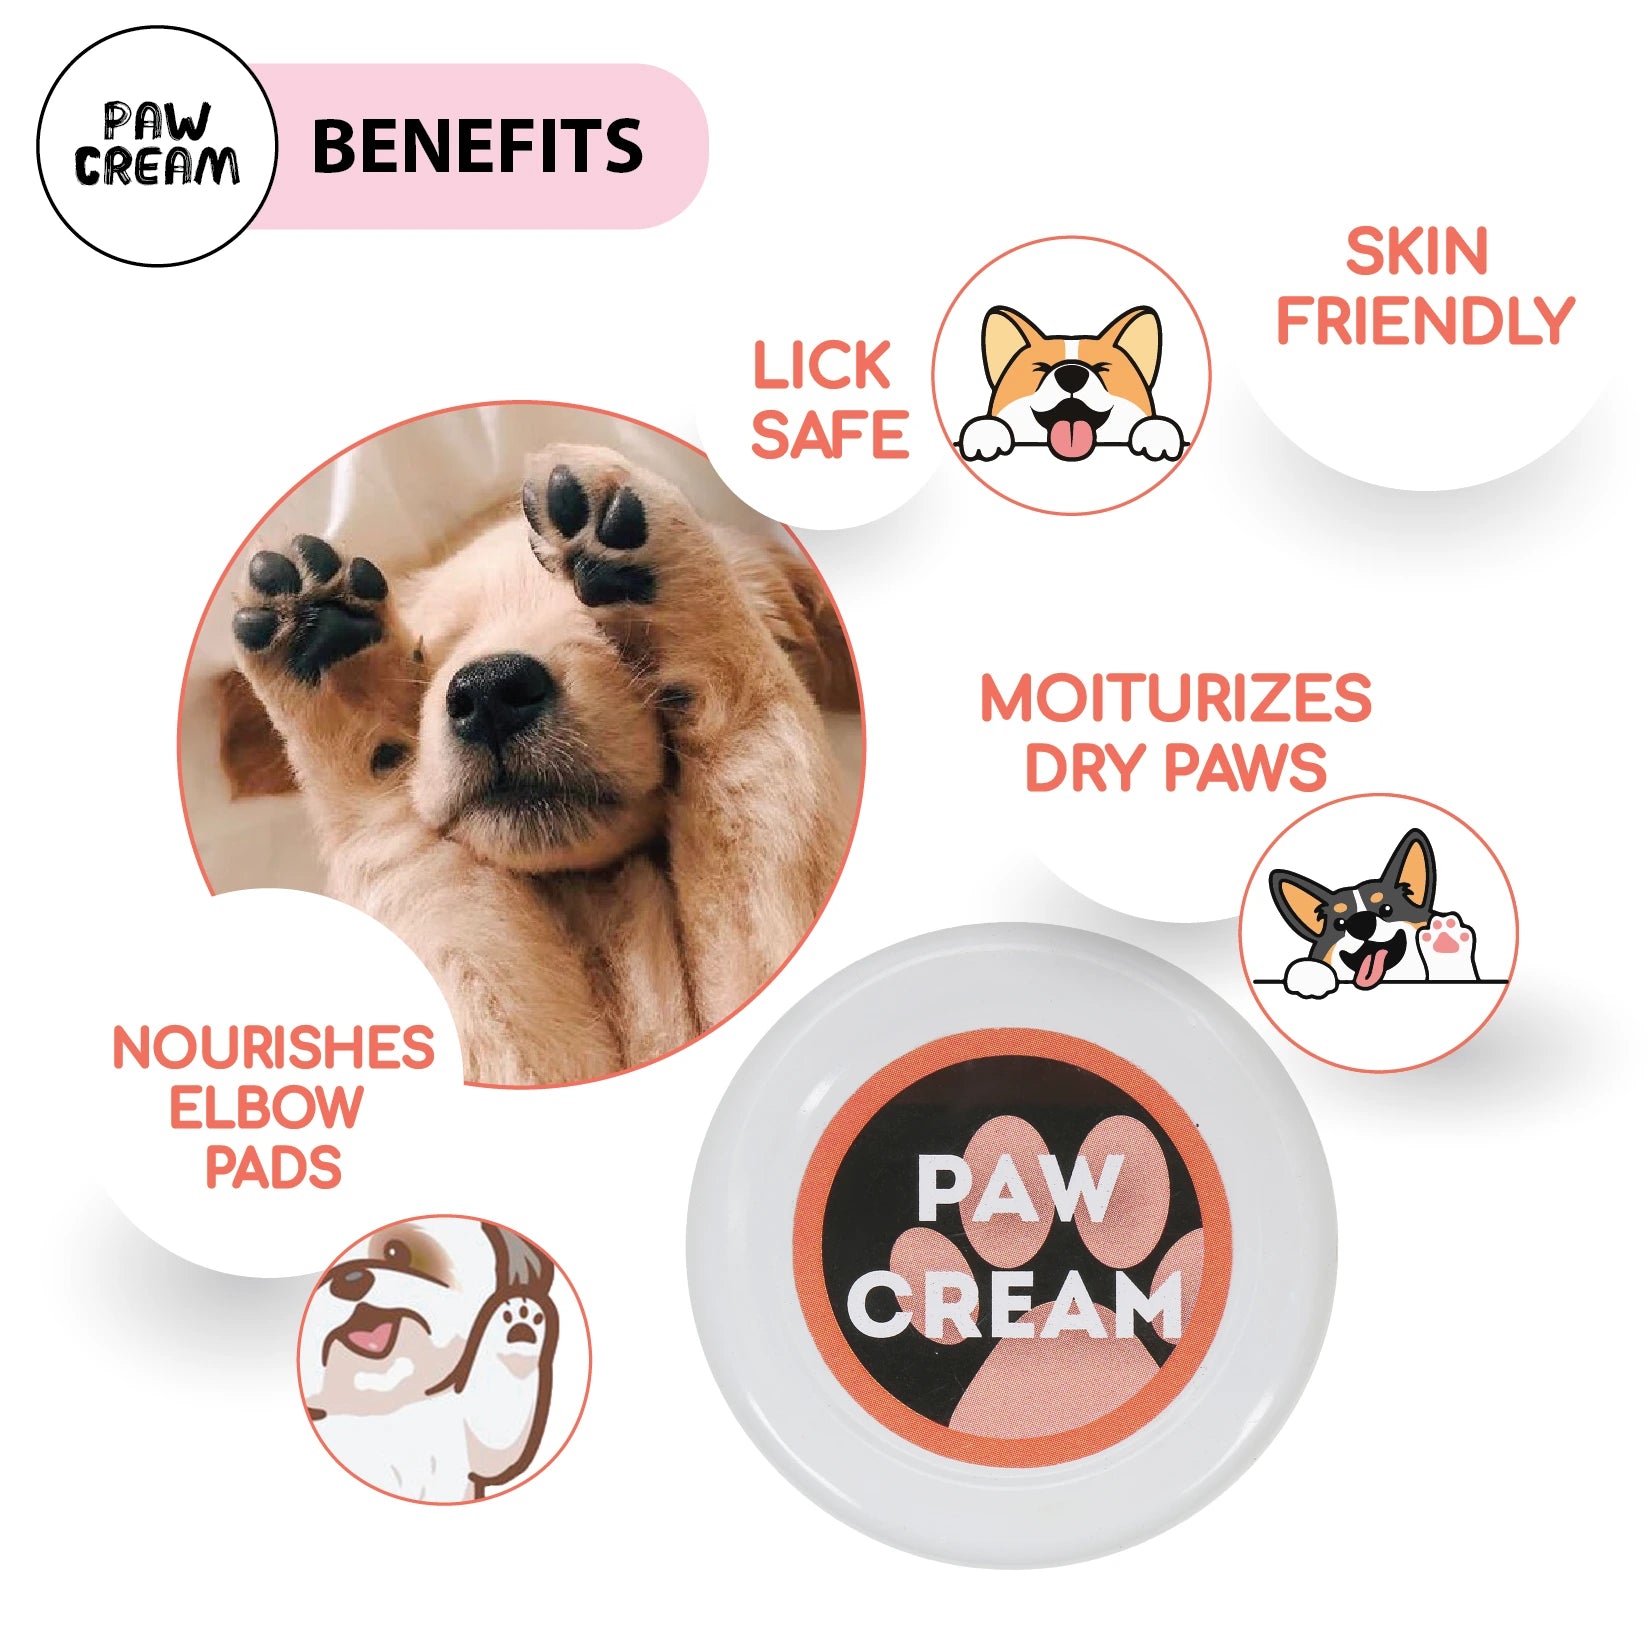 Paw Cream Benefits: Lick-Safe, Elbow Pad Nourishment, Moisturizes Dry Paws, Skin-Friendly